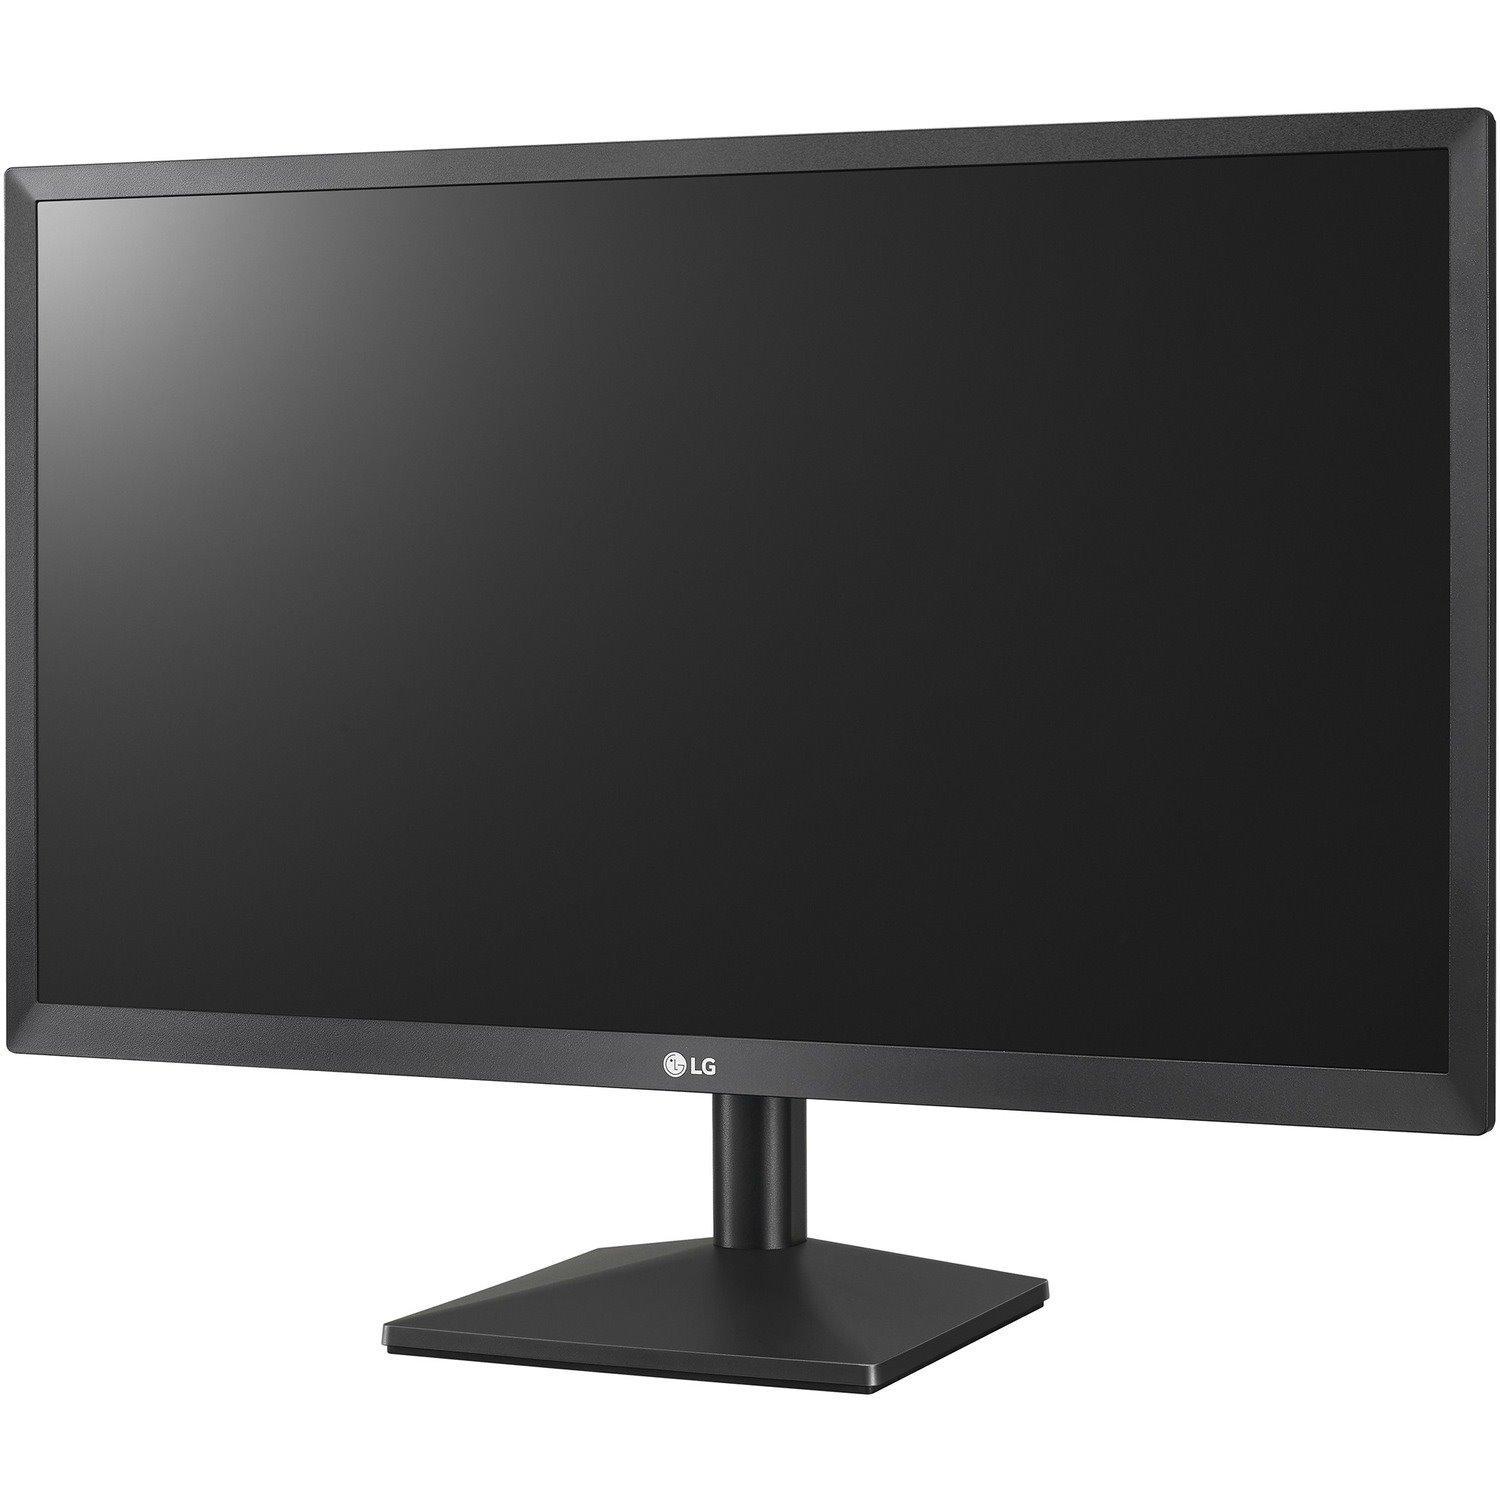 LG 22MN430M-B 21.5" Full HD Gaming LCD Monitor - 16:9